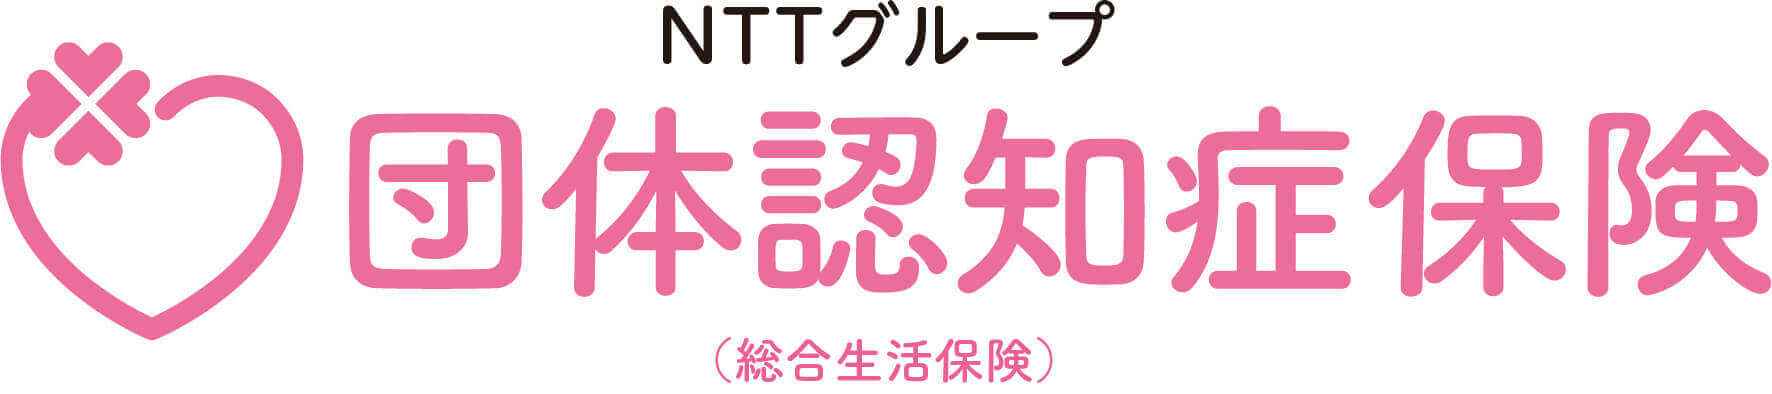 NTTグループ団体認知症保険